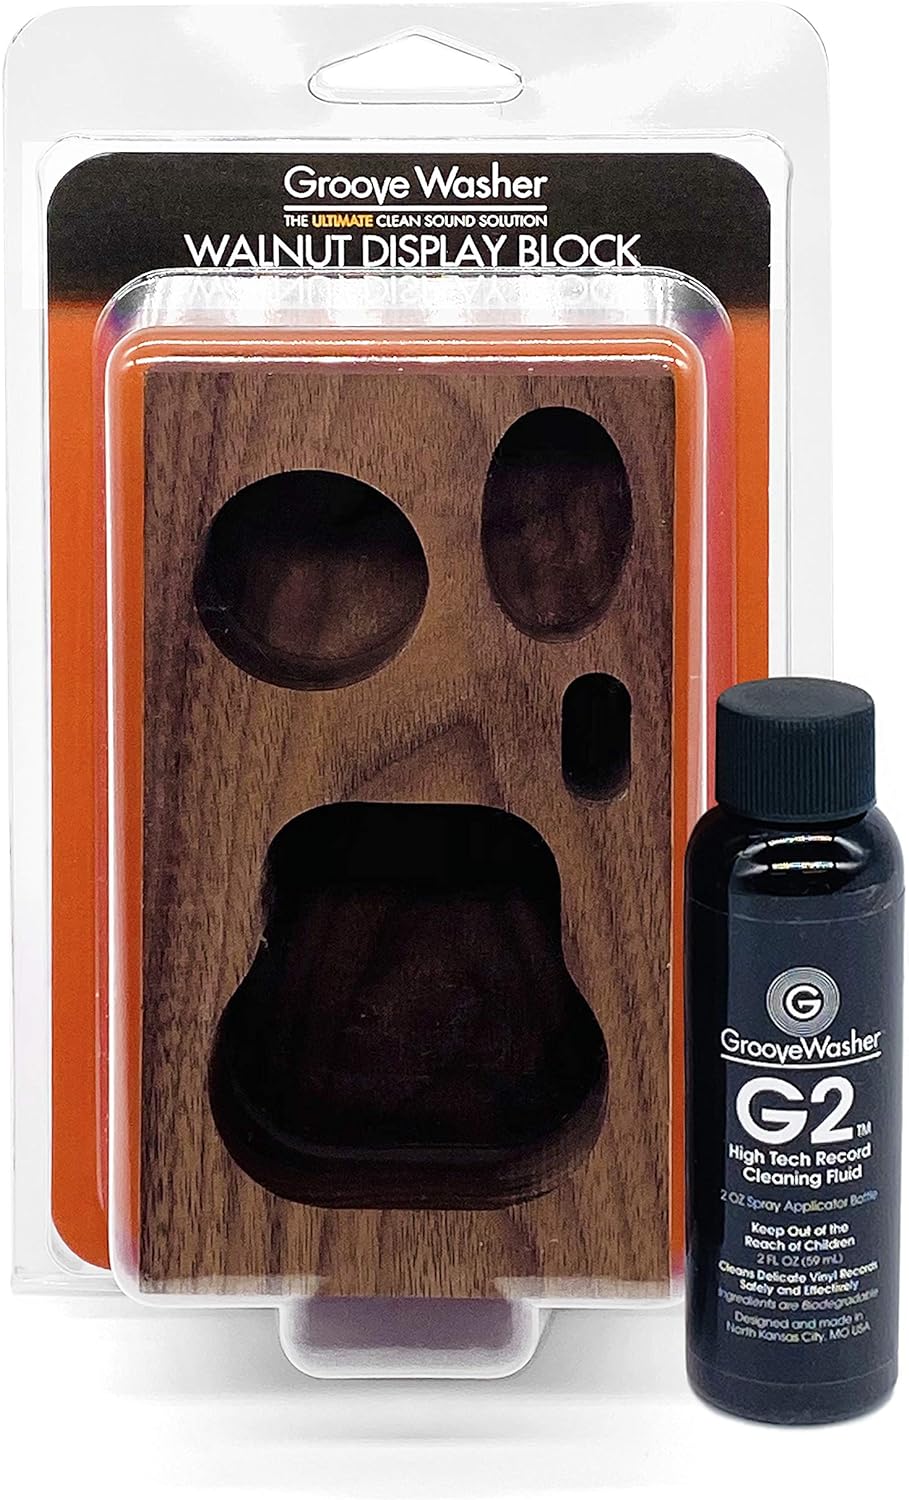 Walnut Display Block + 2 oz G2 Fluid Bottle